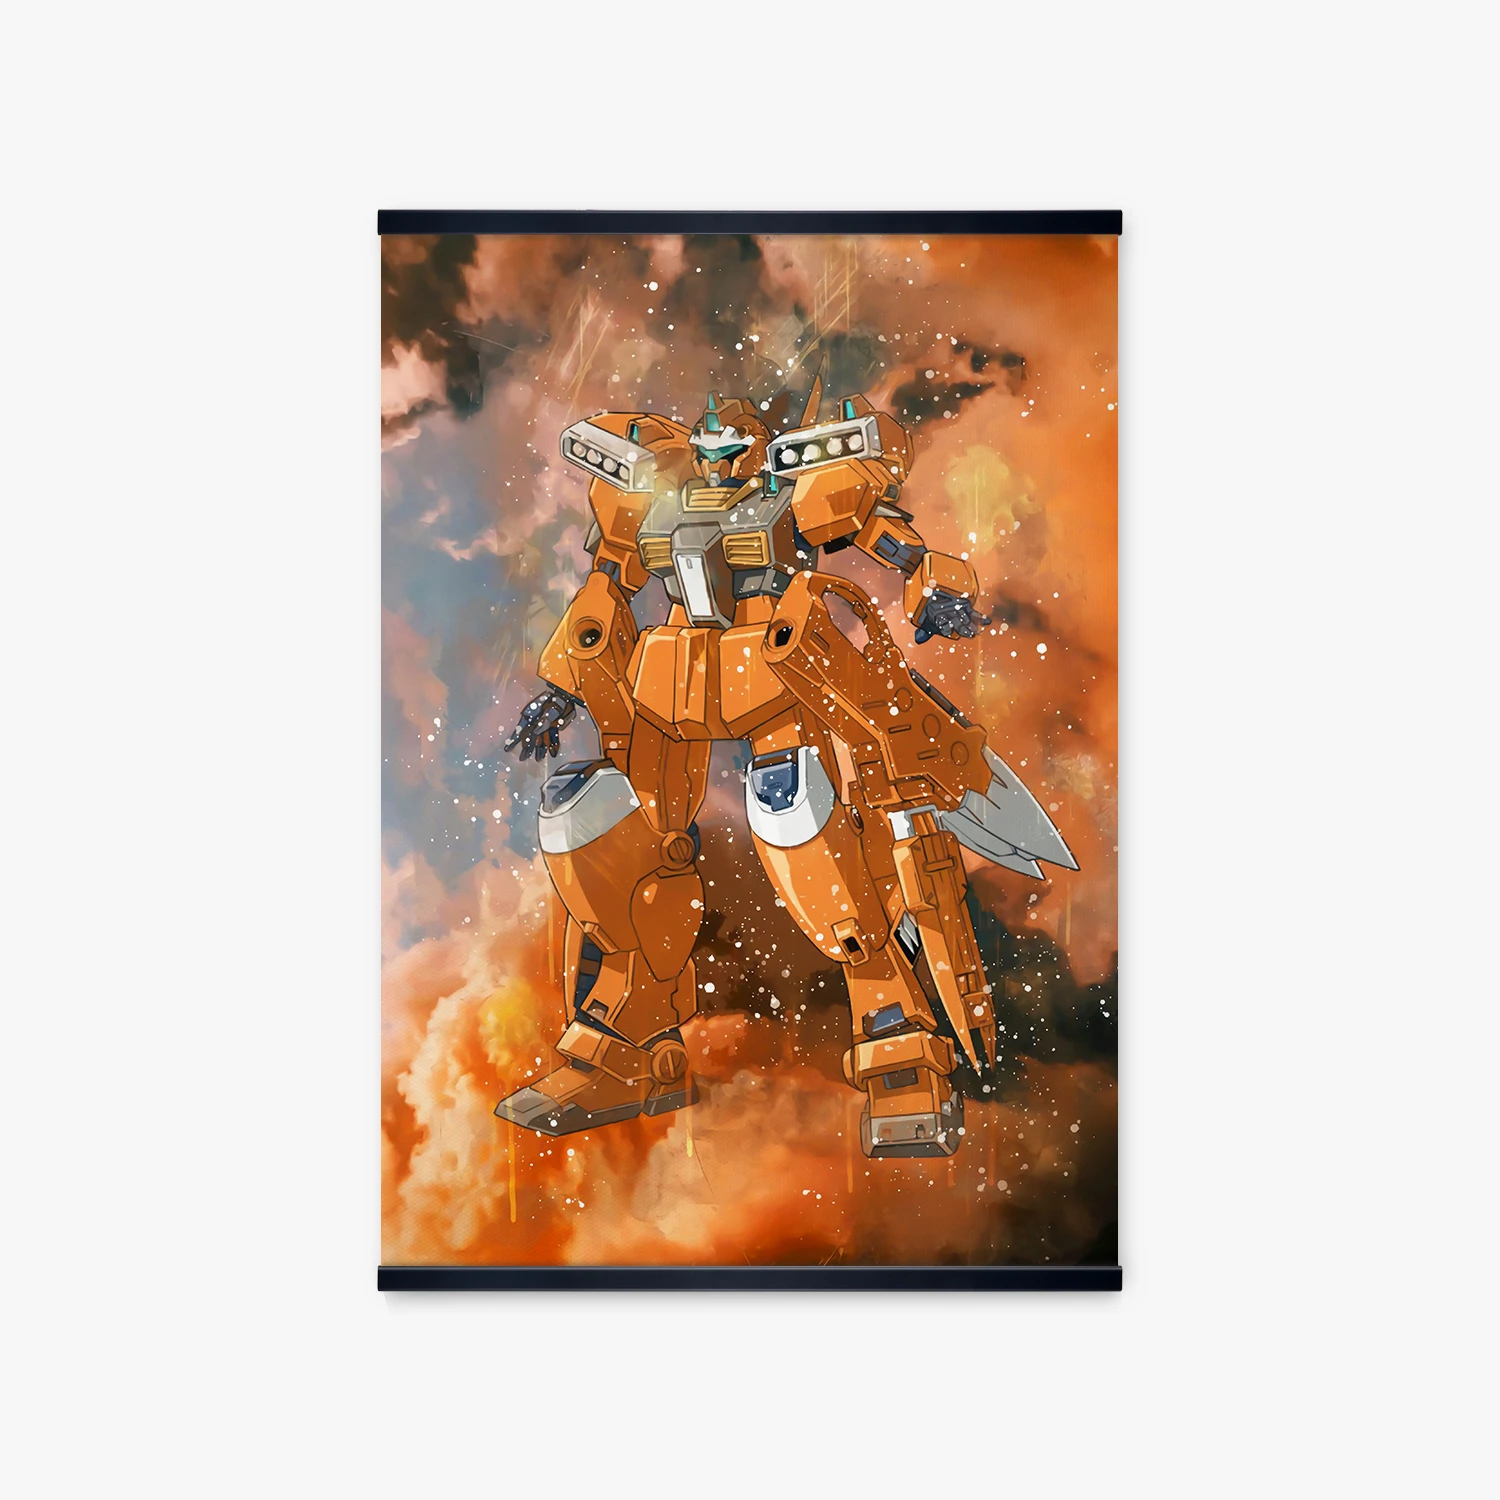 Wall Art Black Magnetic Wooden Frame Gundams Orange Robot Modular Poster  Print Anime Canvas Painting Home Decor Picture Bedroom|Vẽ Tranh & Thư Pháp|  - AliExpress